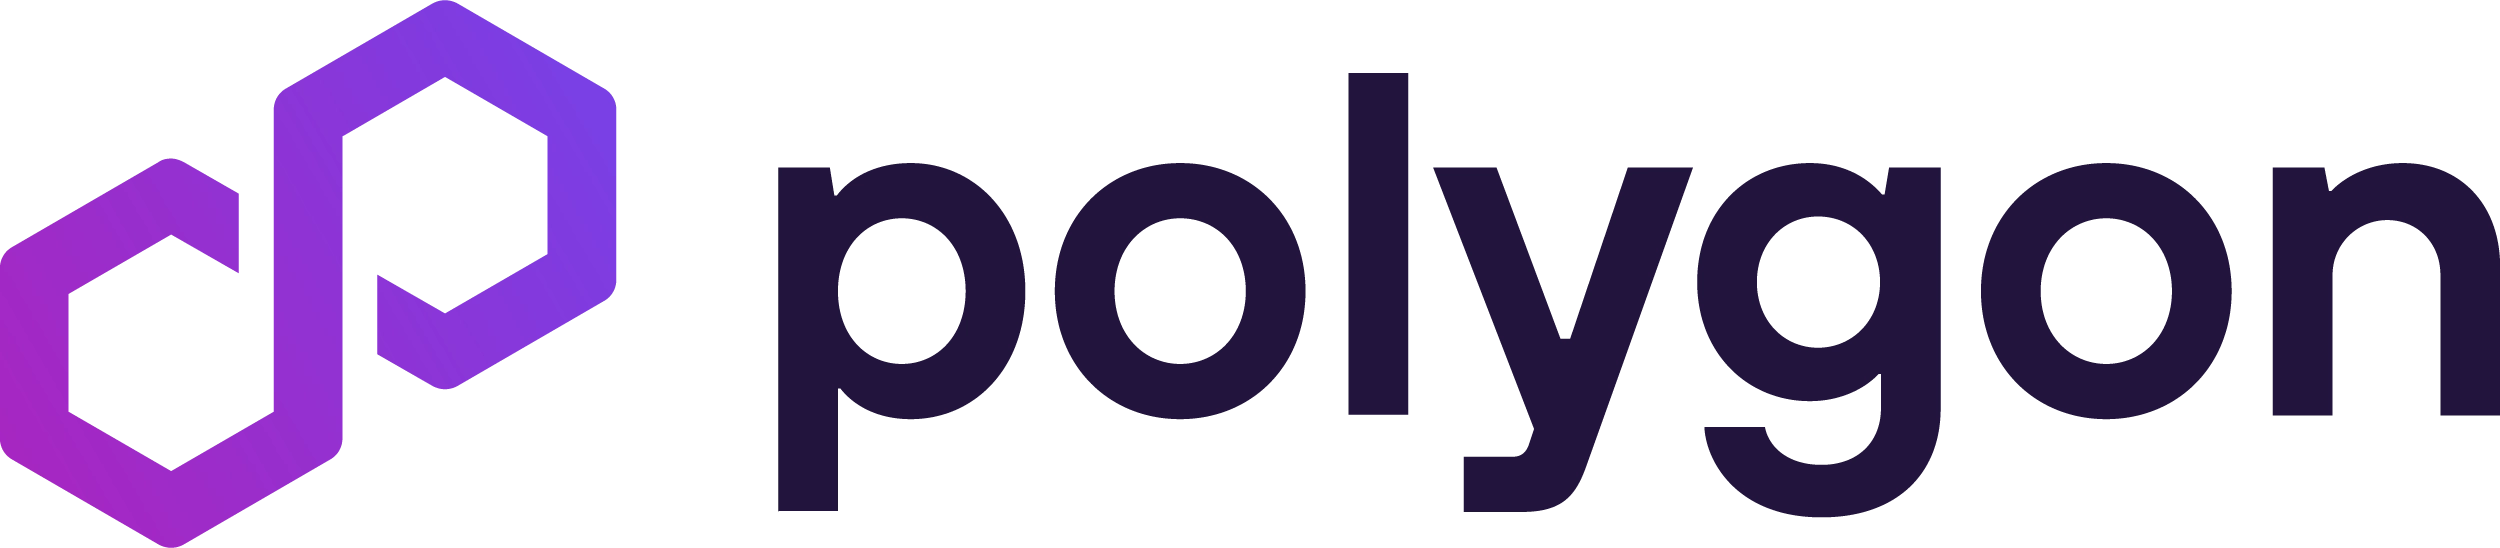 full-polygon-logo.webp